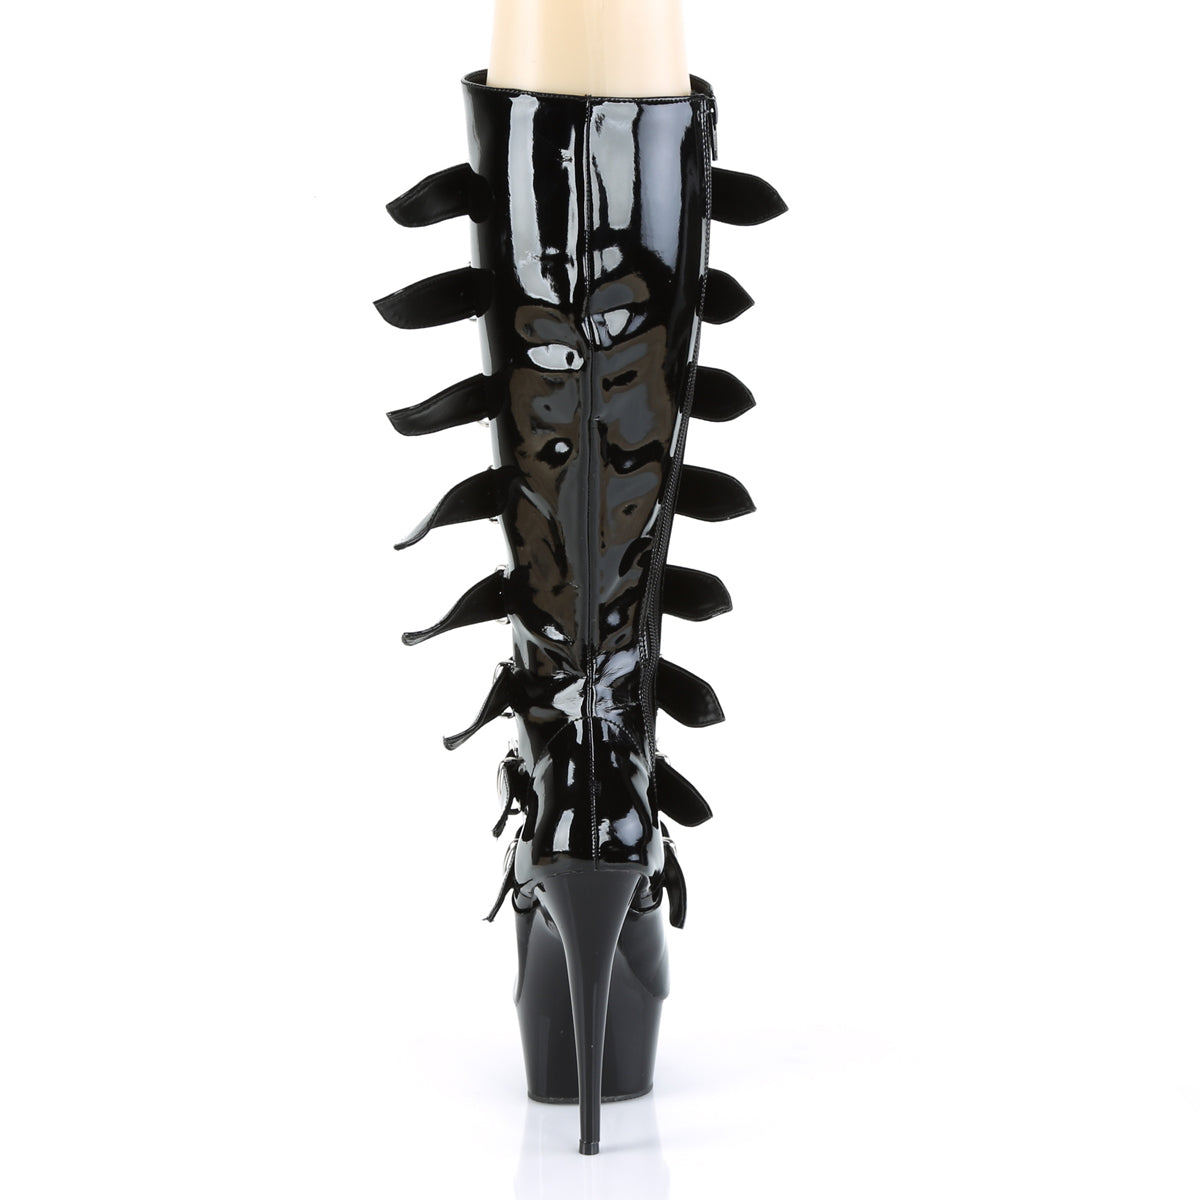 DELIGHT-2049 6 Inch Heel Black Patent Pole Dancing Platforms-Pleaser- Sexy Shoes Fetish Footwear